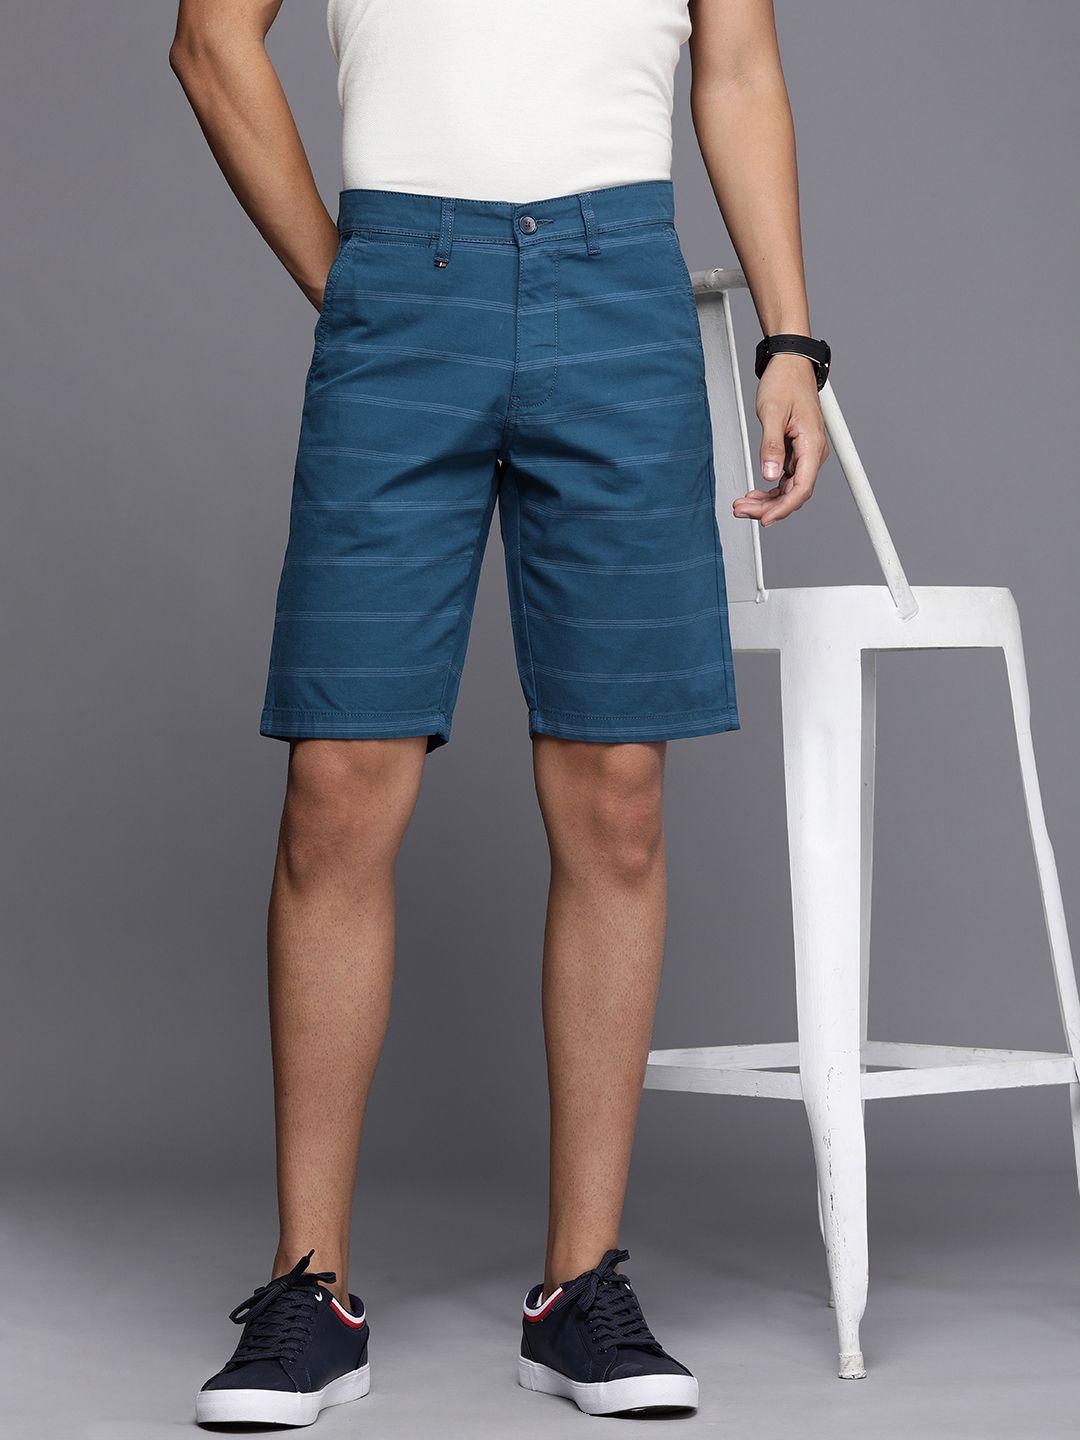 louis-philippe-sport-men-teal-blue-striped-slim-fit-shorts